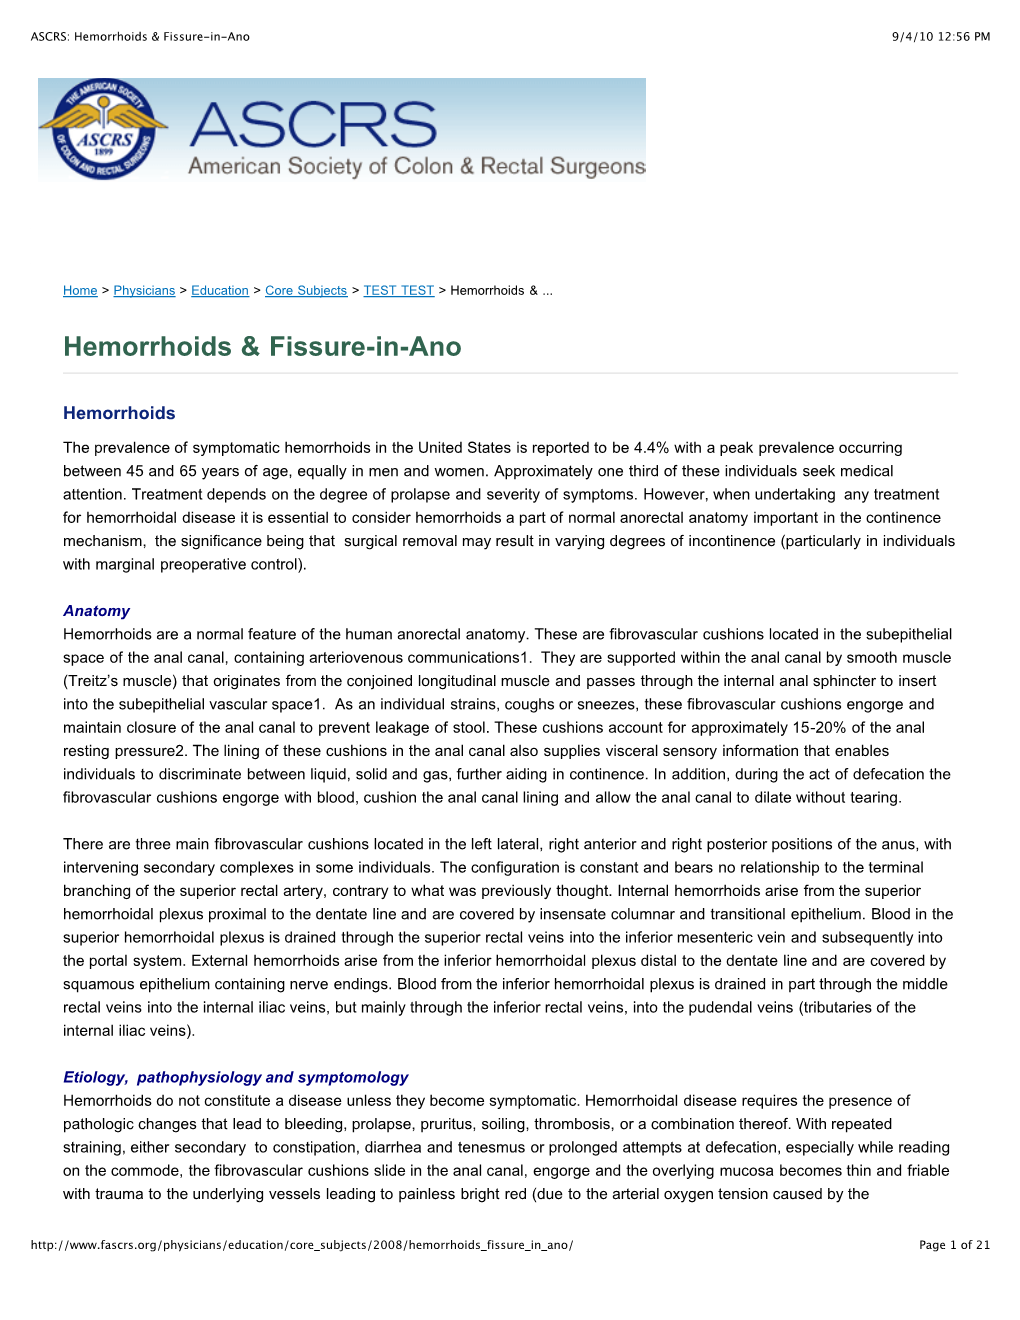 Hemorrhoids & Fissure-In-Ano